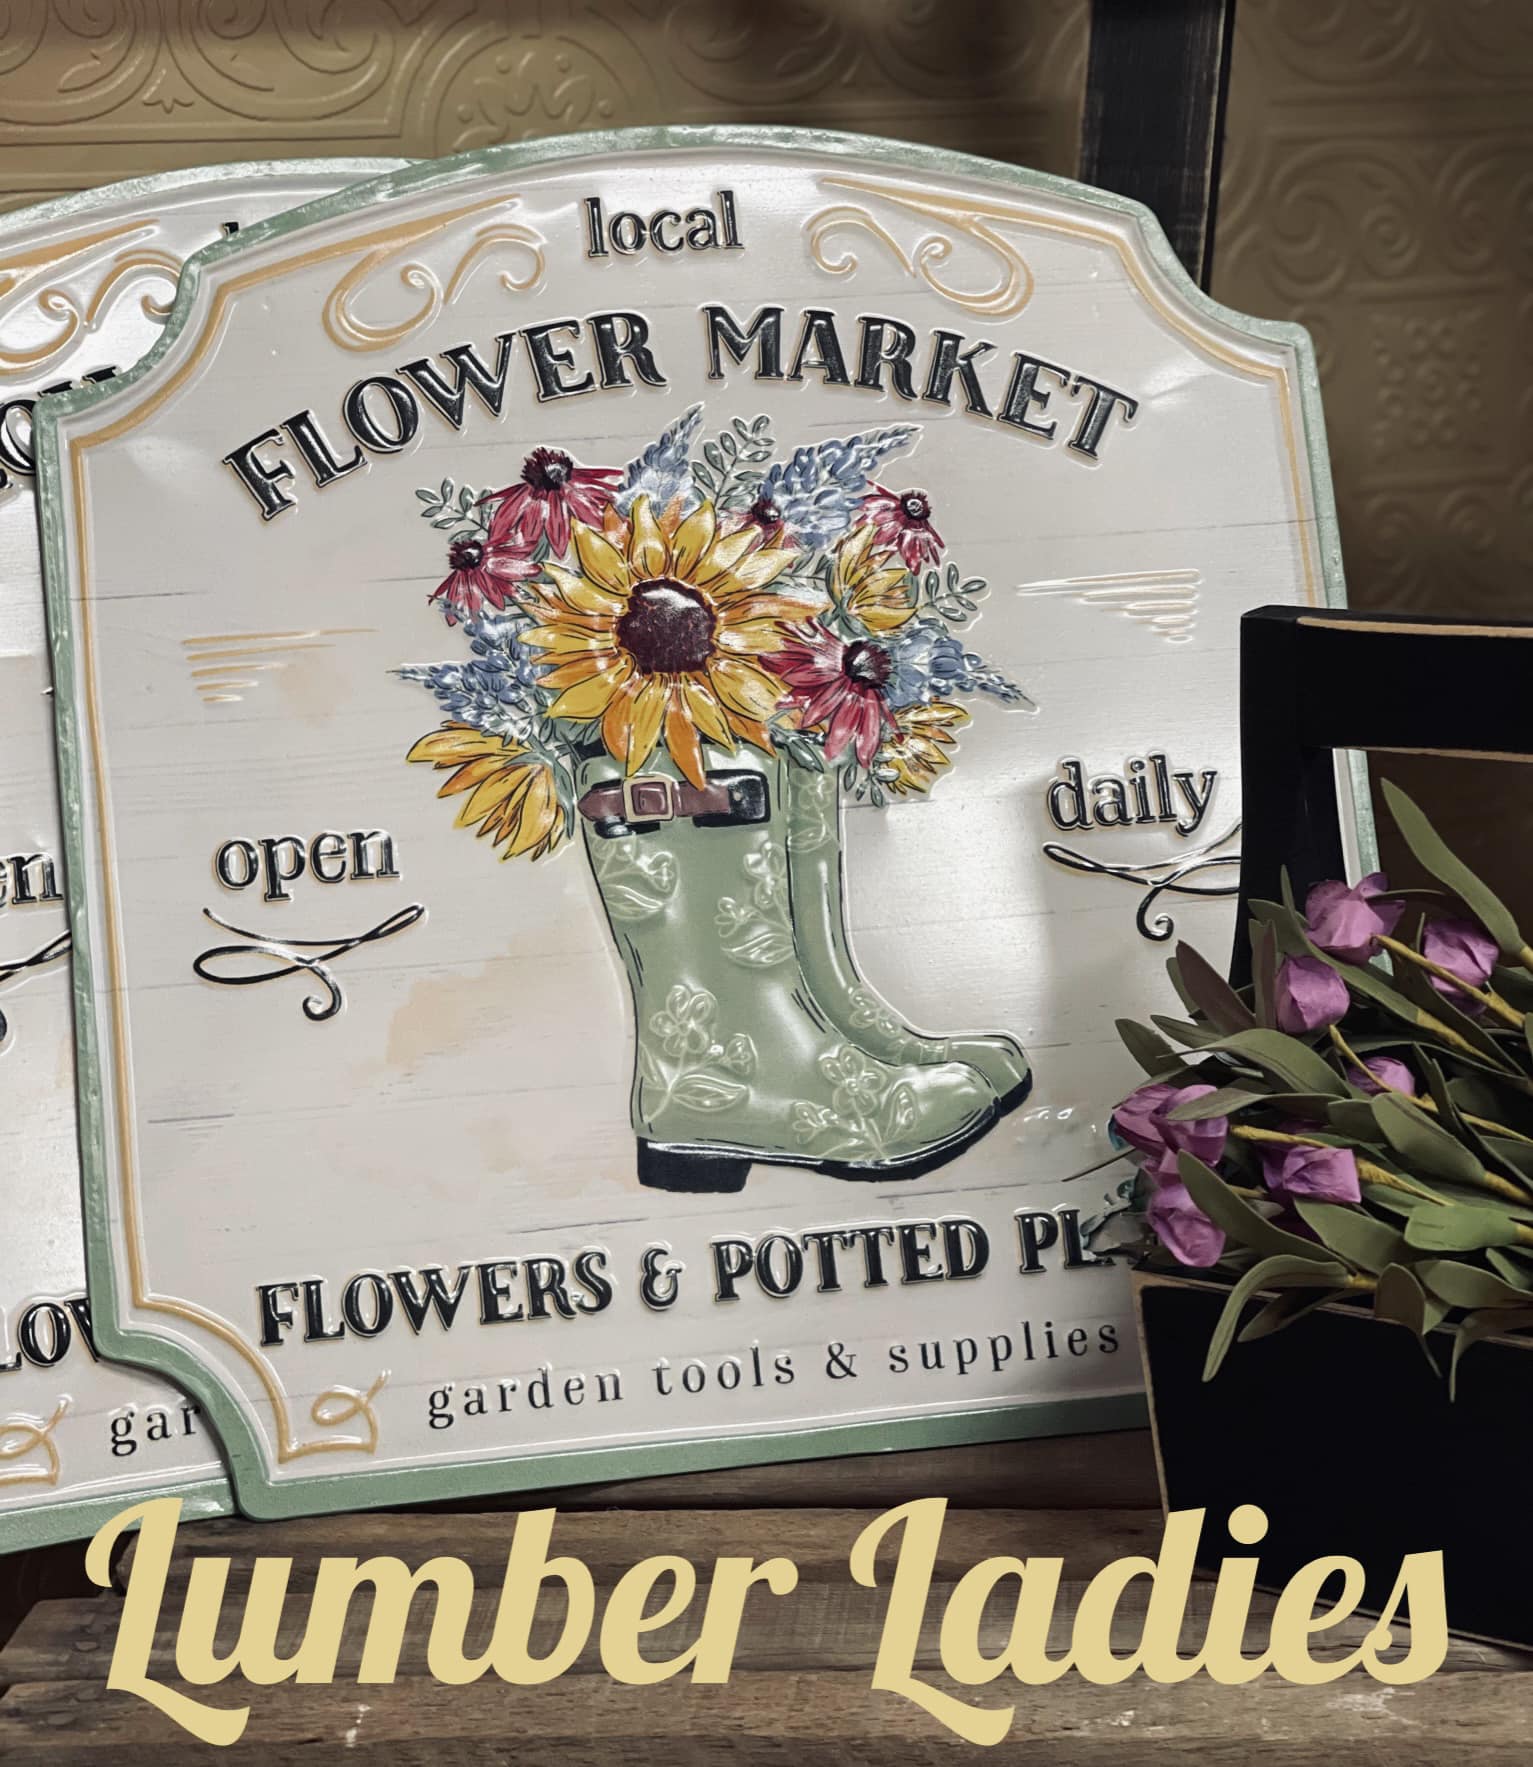 "Flower Market flowers & potted plants" sign.